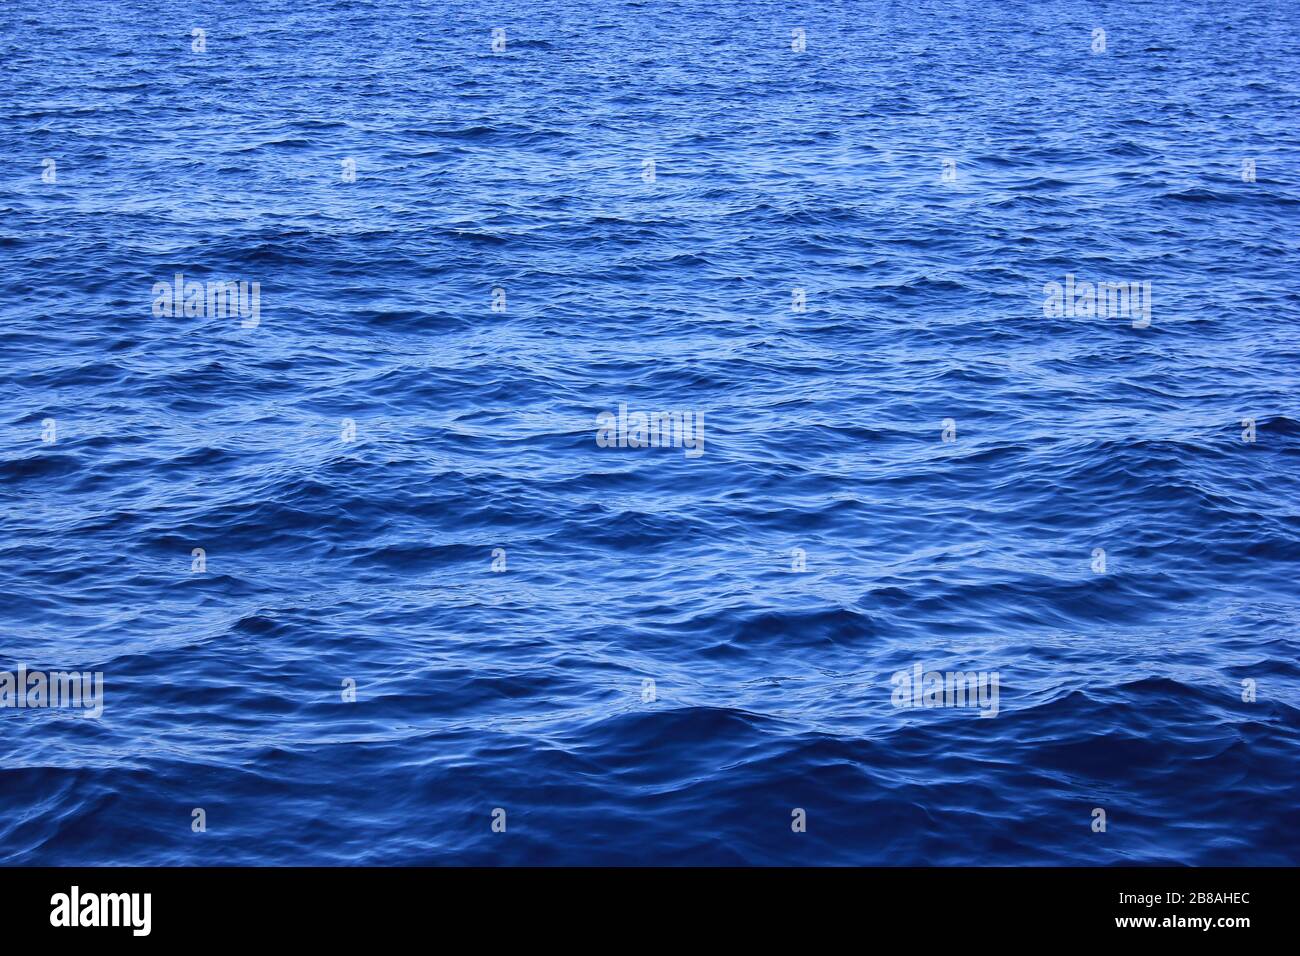 vivid dark blue sea surface - closeup photo Stock Photo